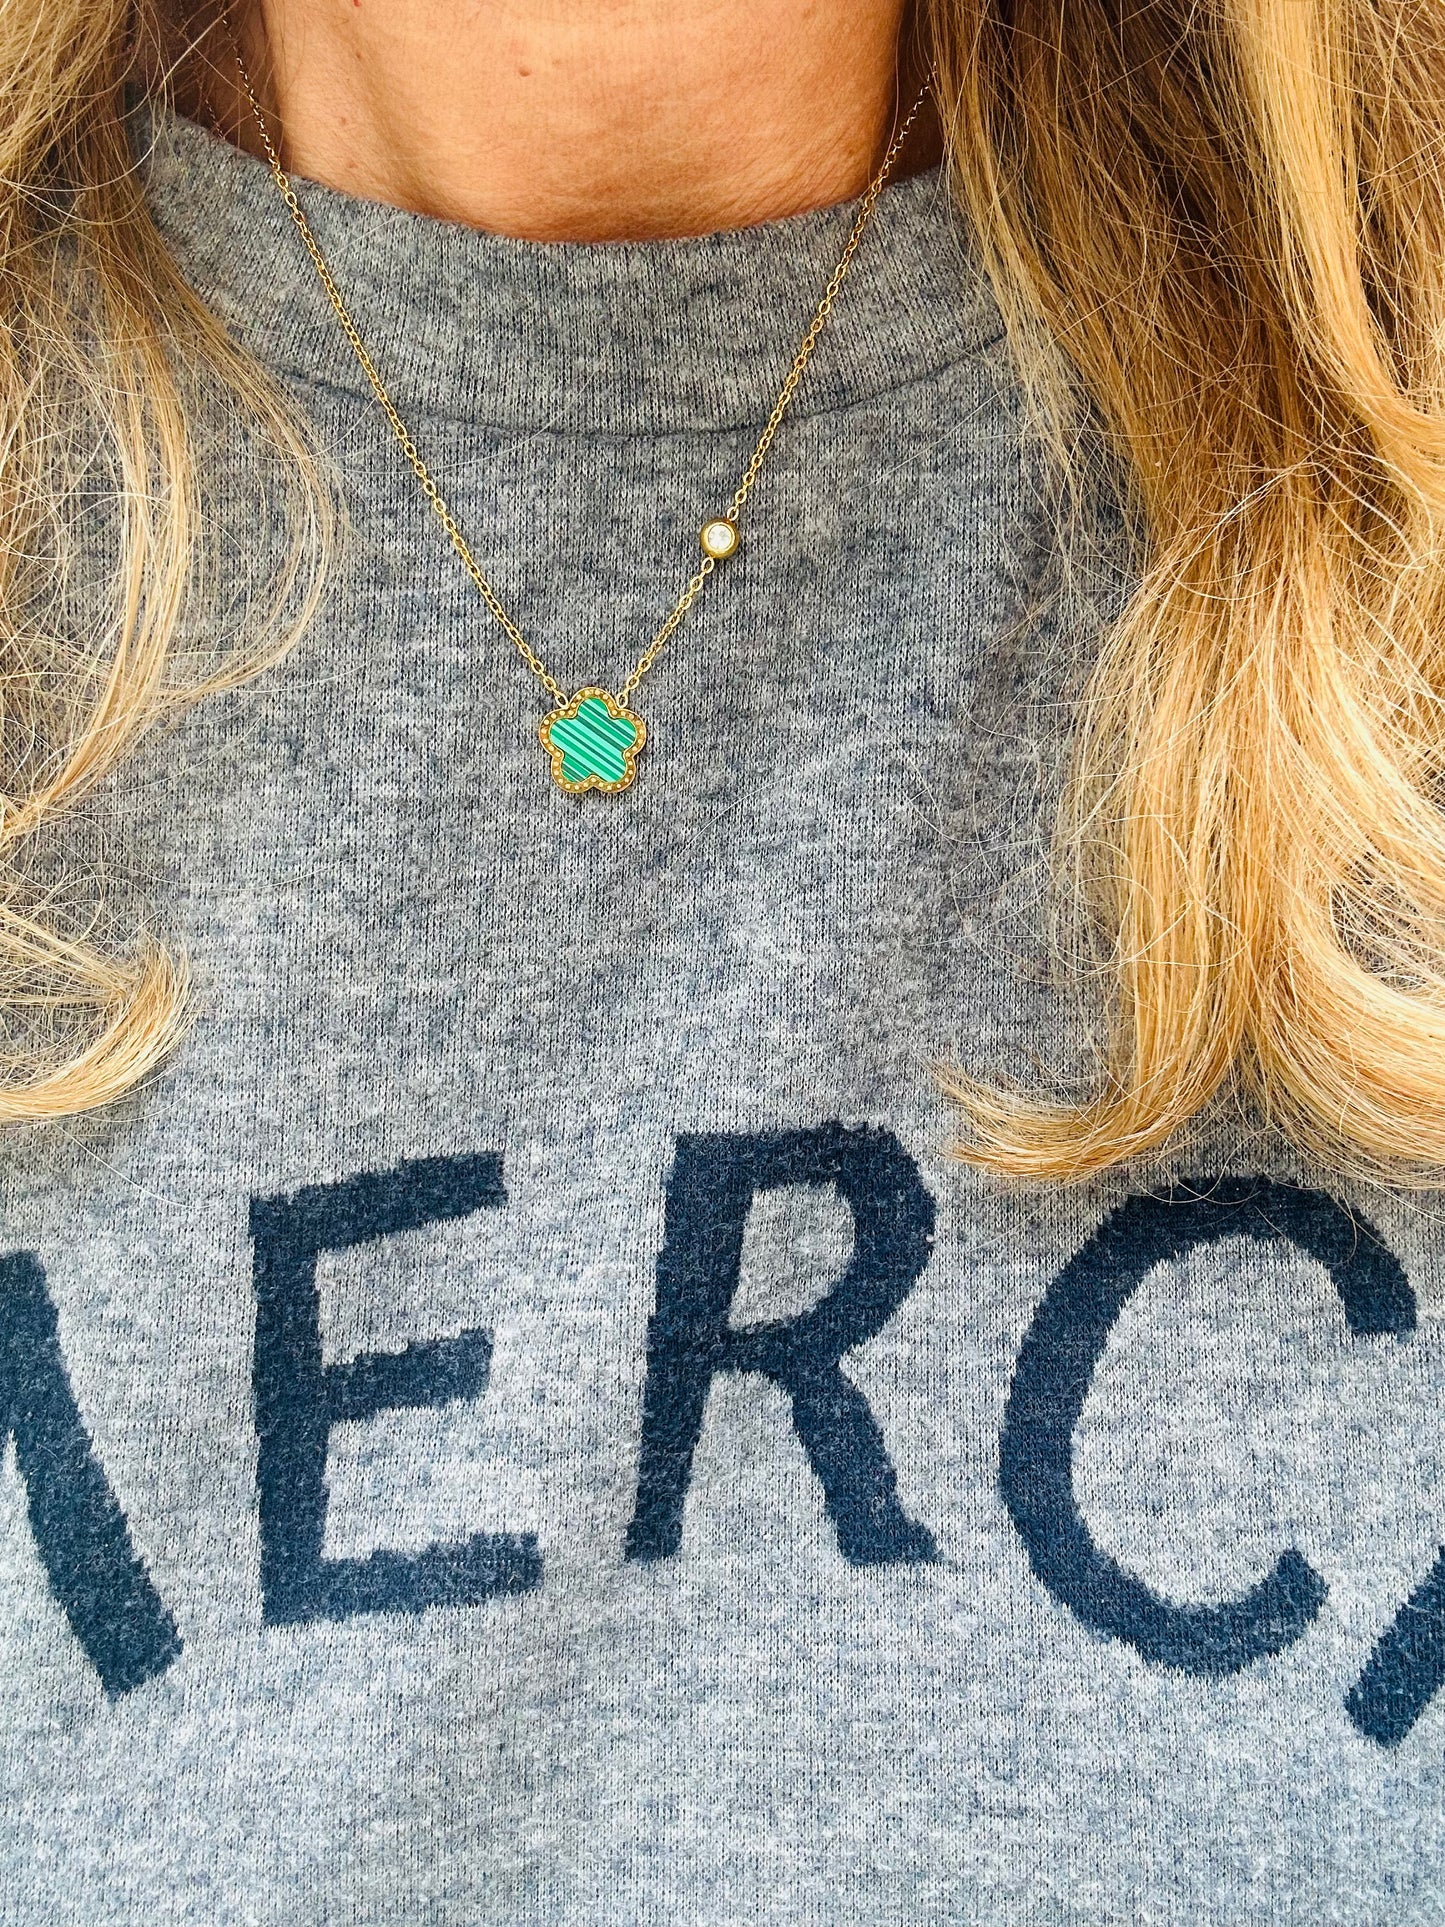 Clover Necklace | Green